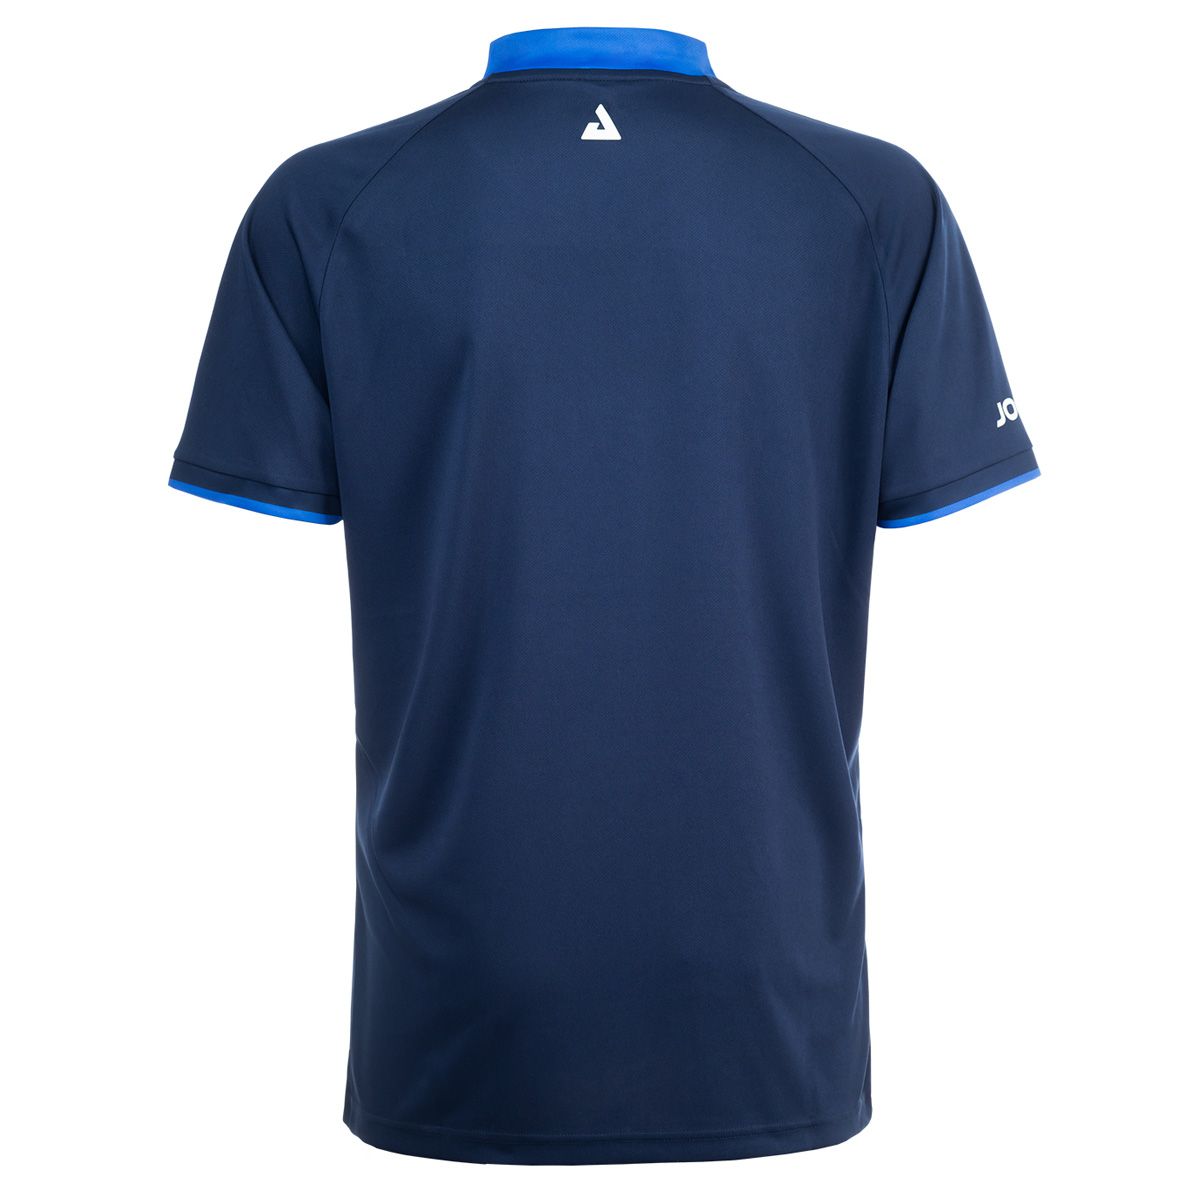 JOOLA Shirt Torrent navy/blue XXS